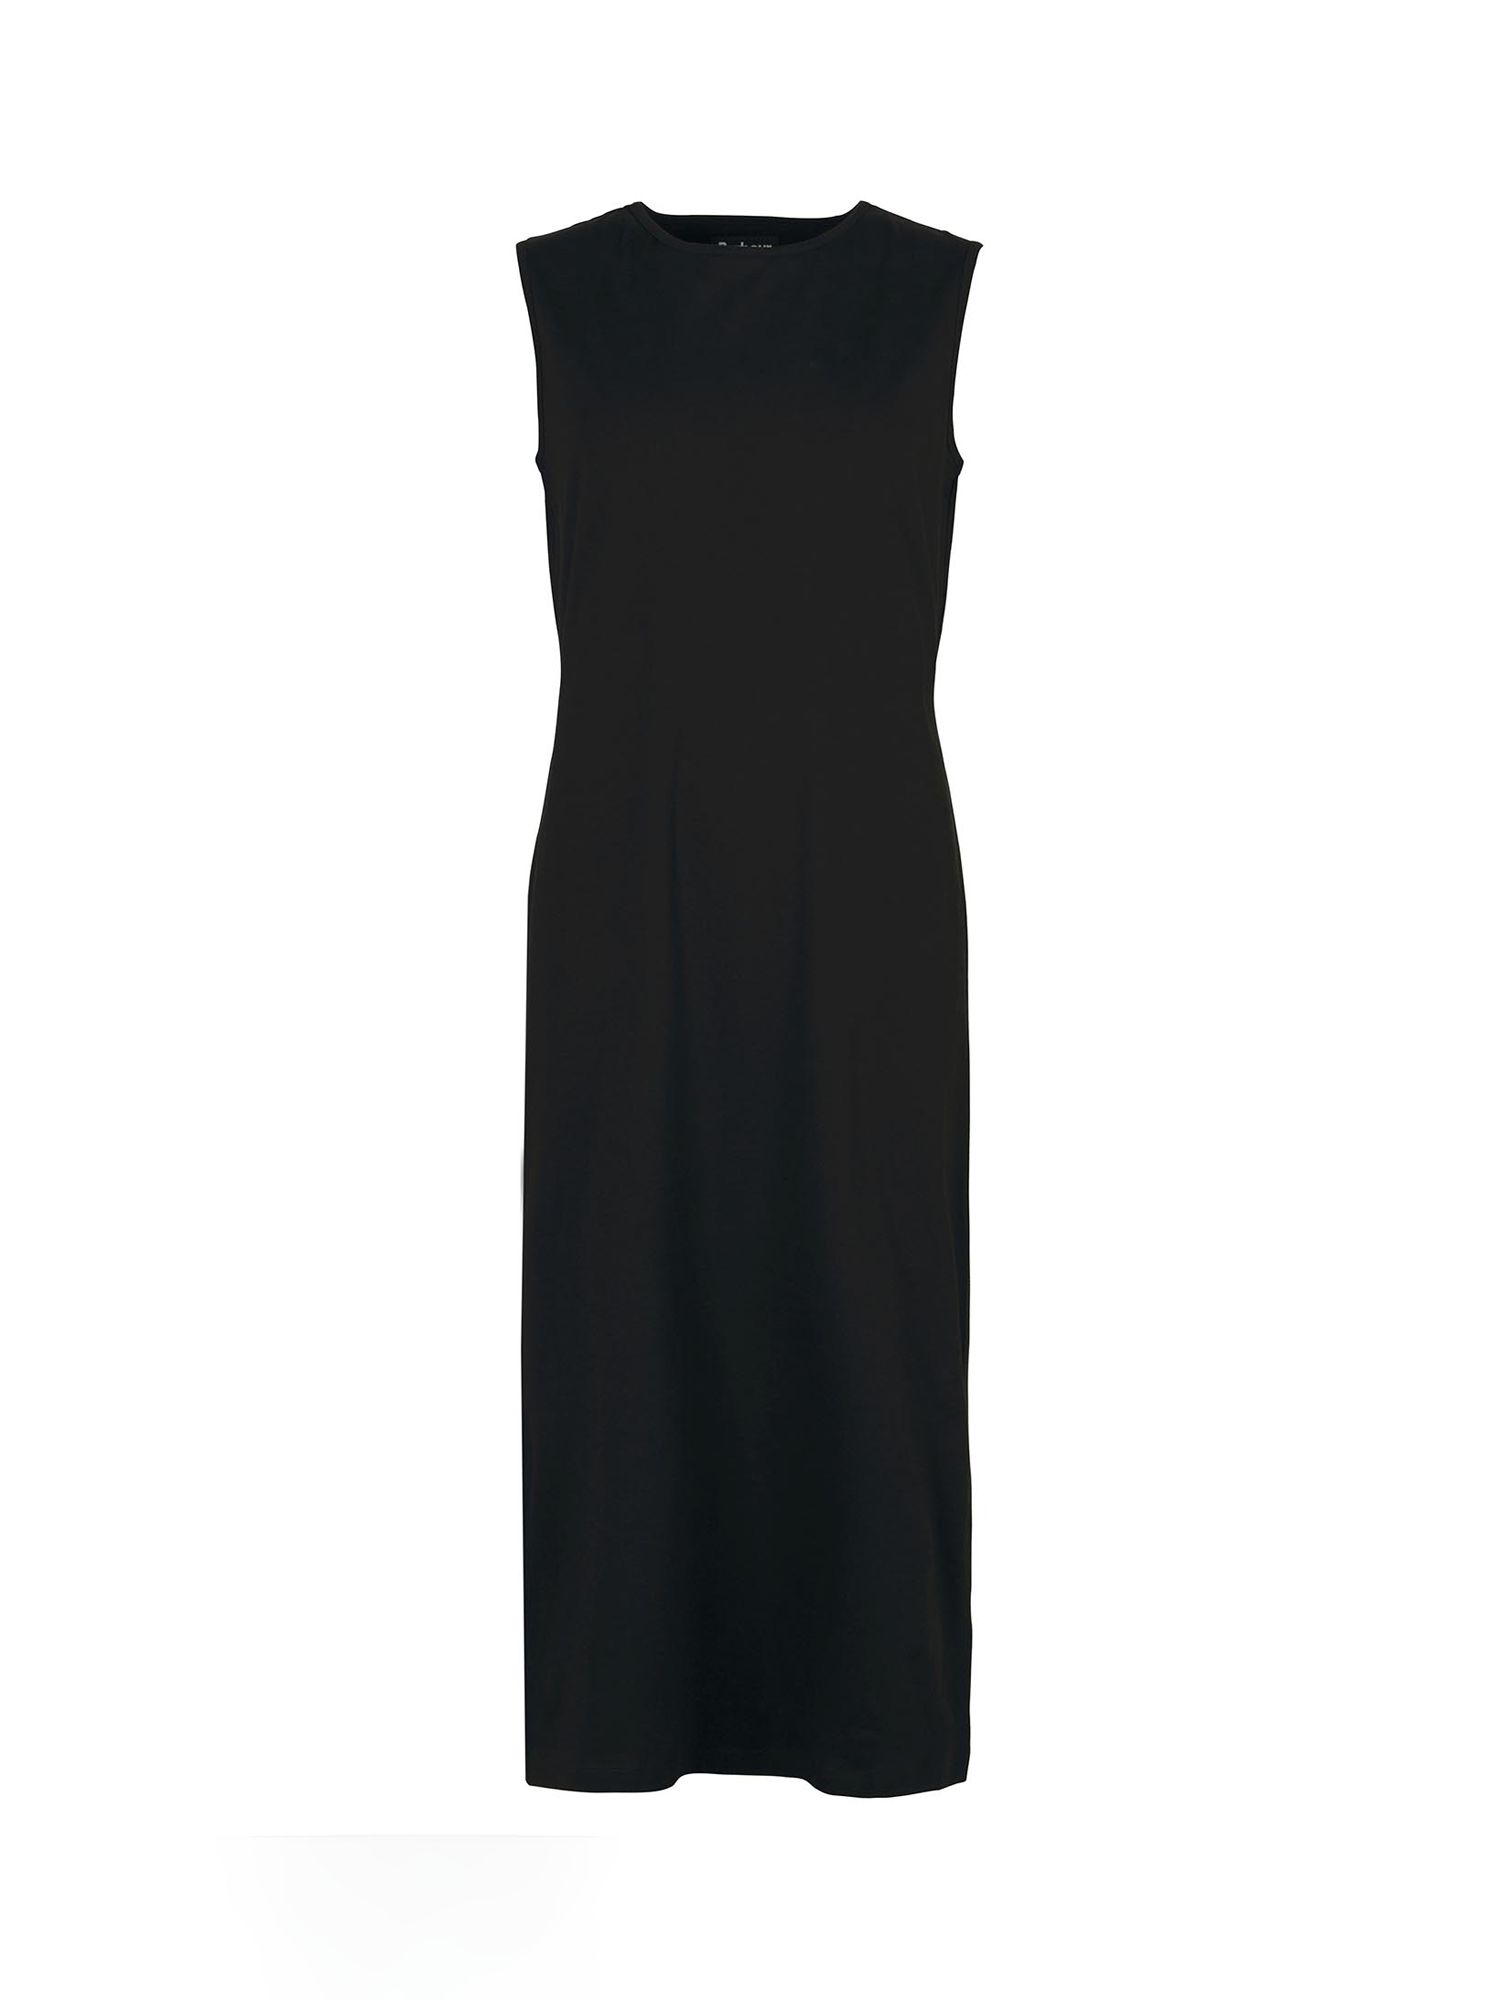 Barbour International Fullcourt Midi Dress, Black at John Lewis & Partners